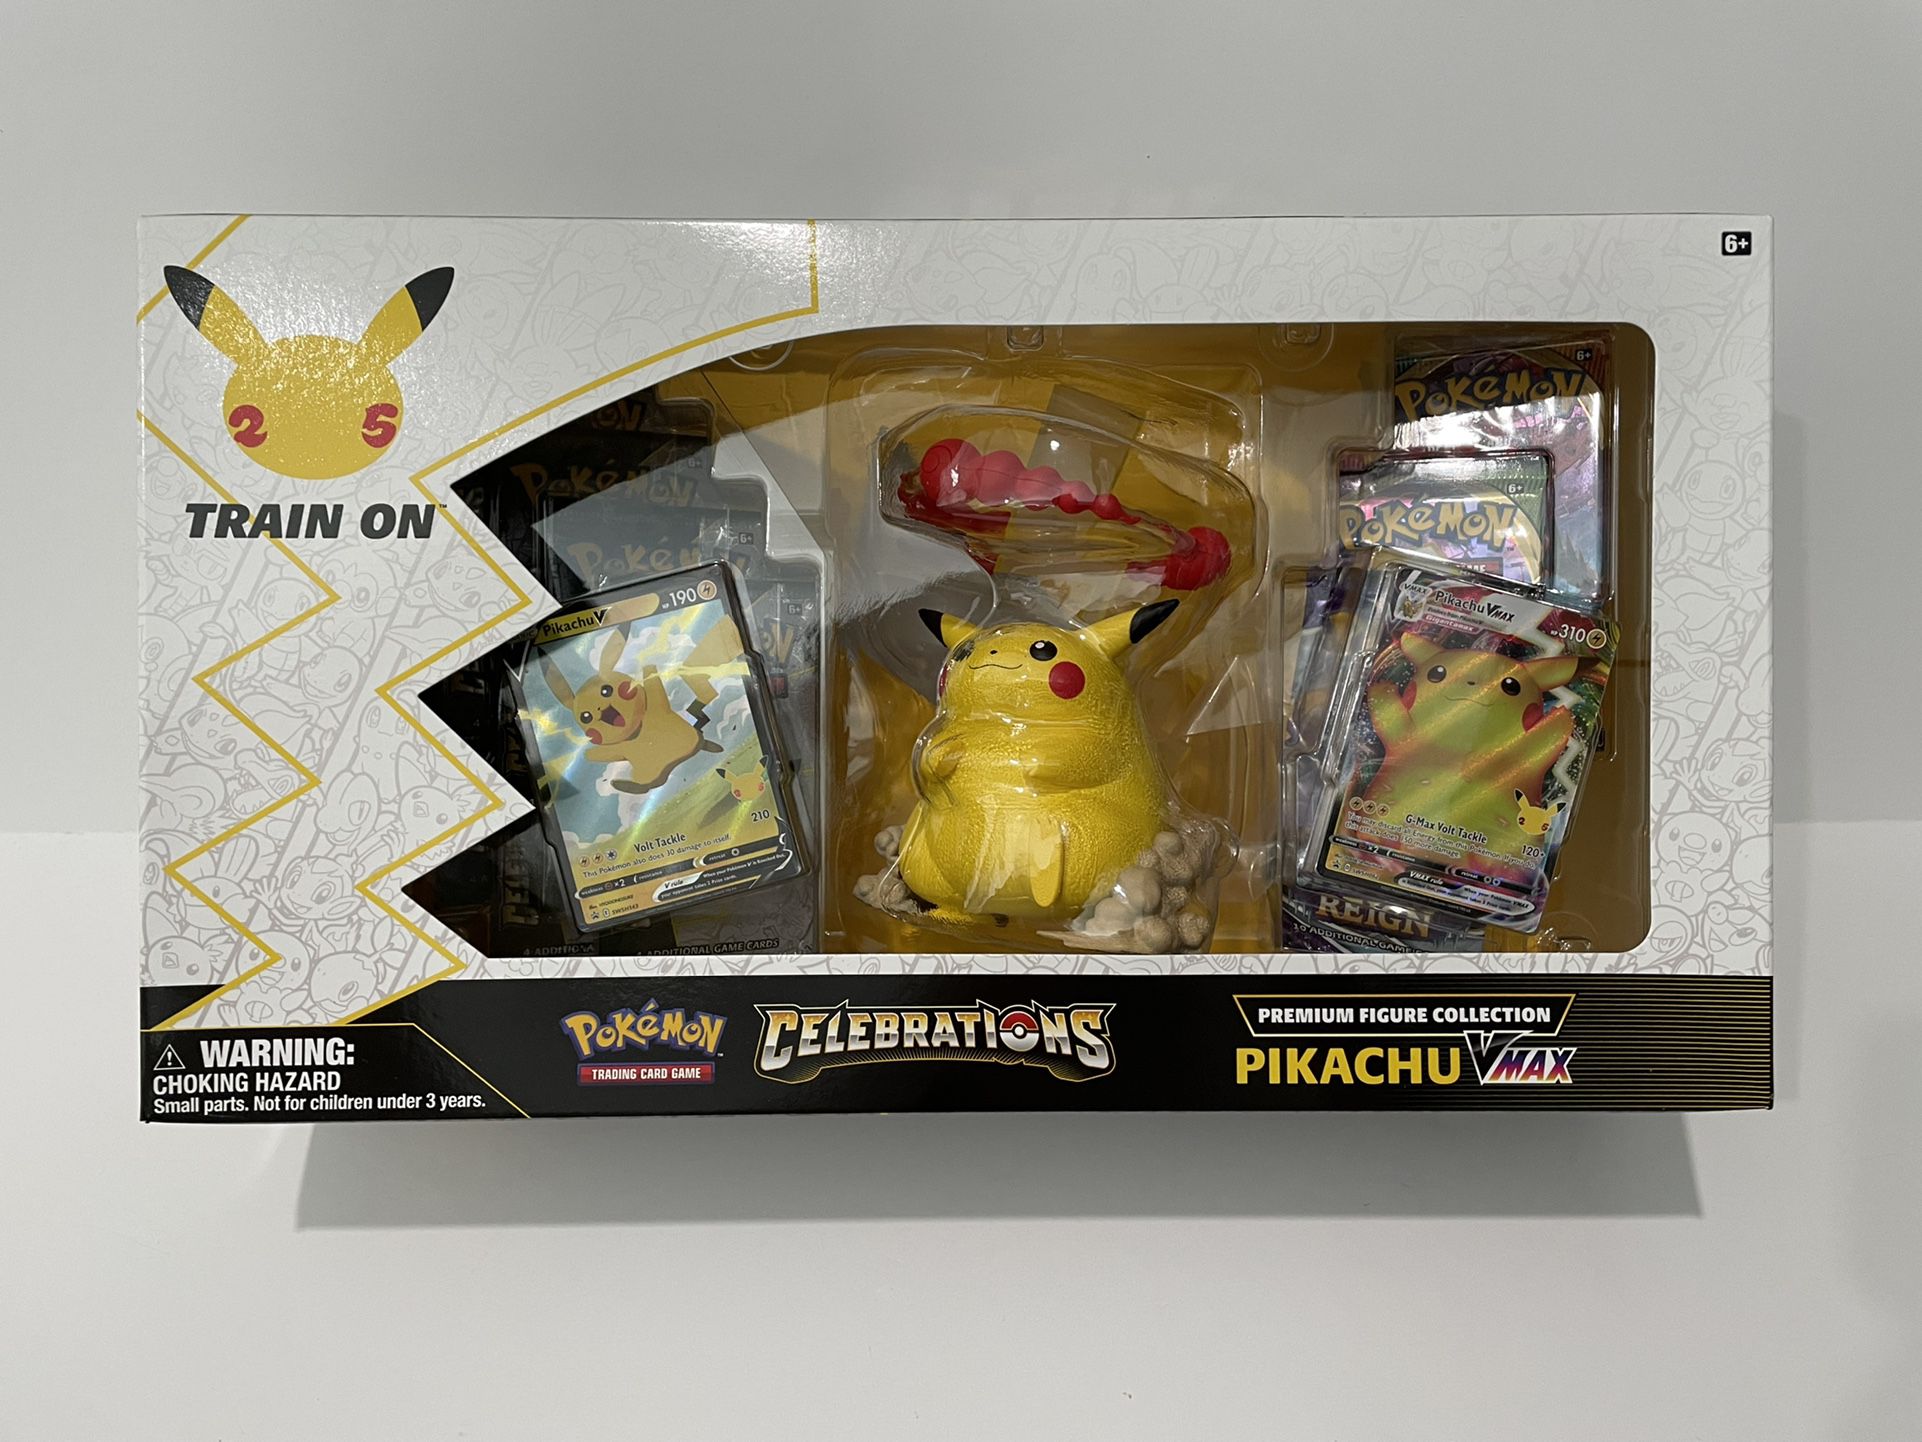 Pokemon TCG: Celebrations Premium Figure Collection Pikachu VMAX - SHIPS NOW